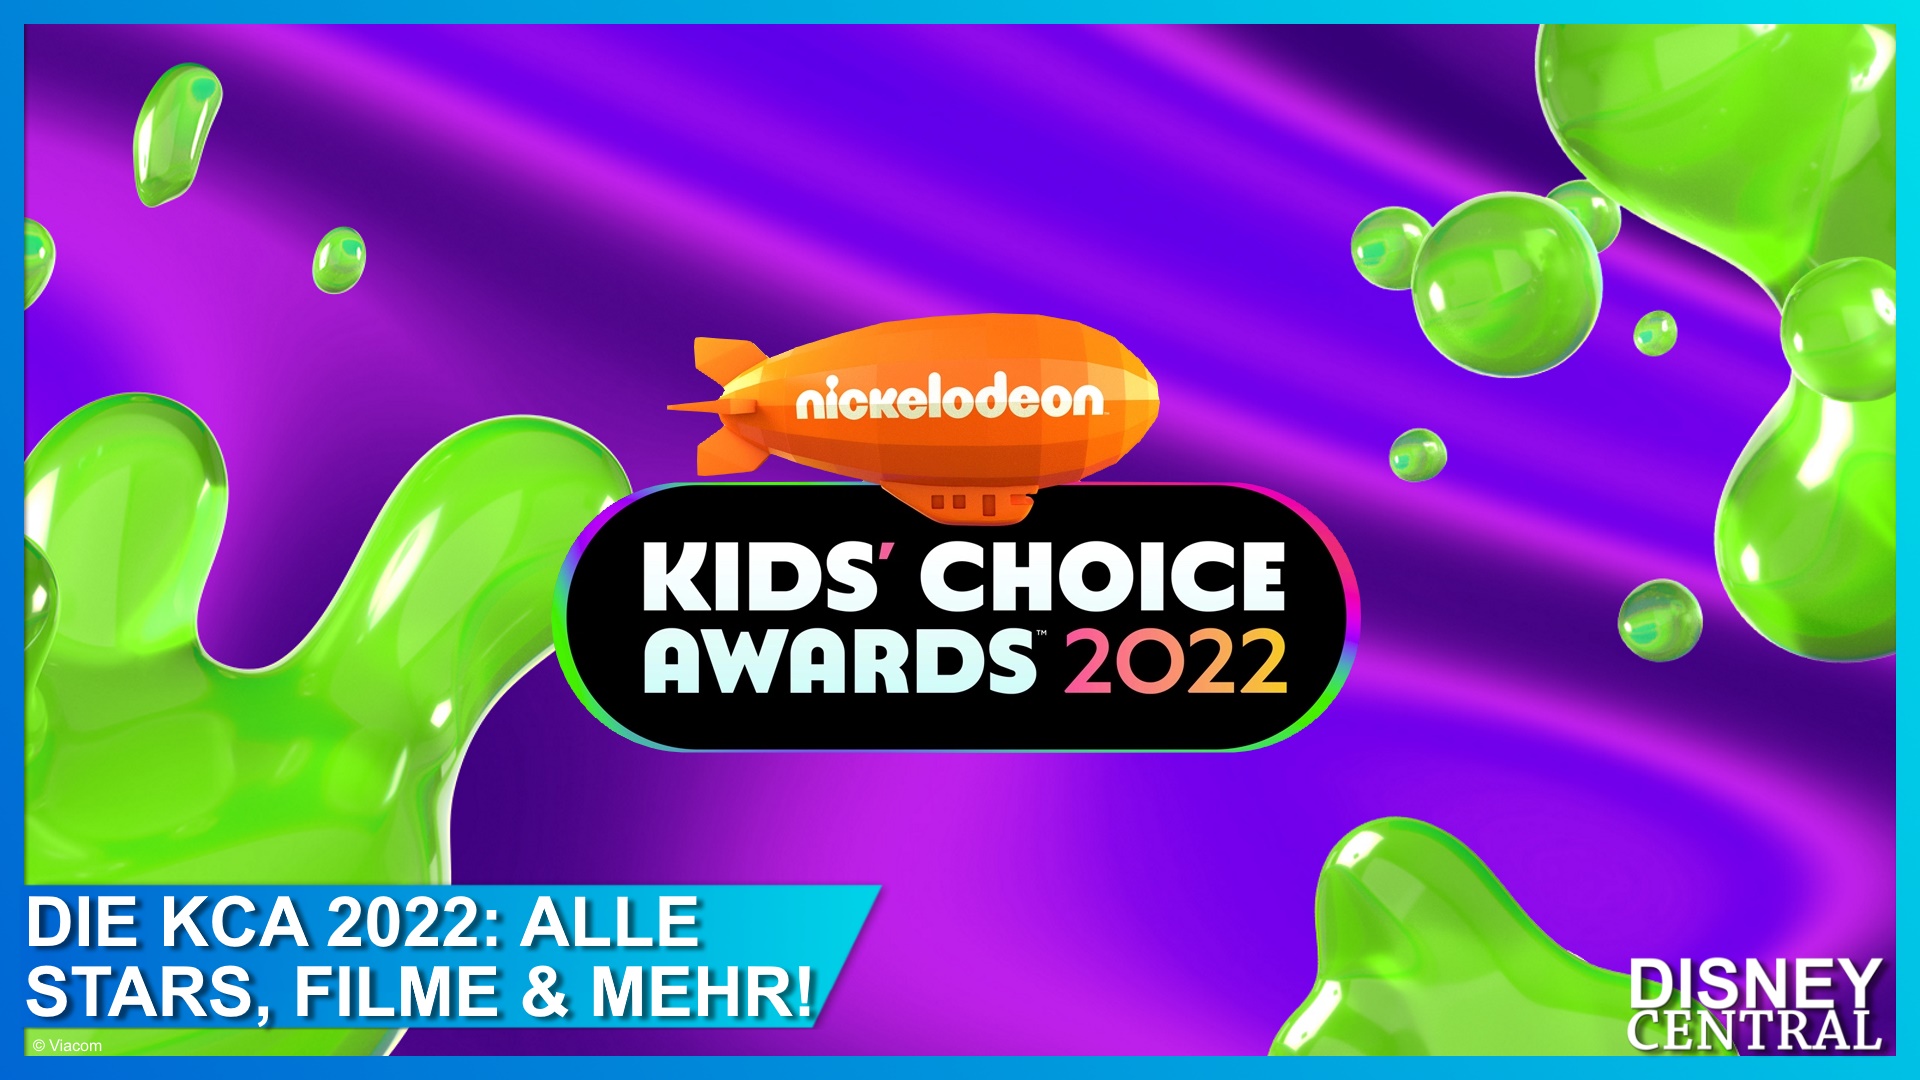 Nickelodeon Kids Choise Awards 2022